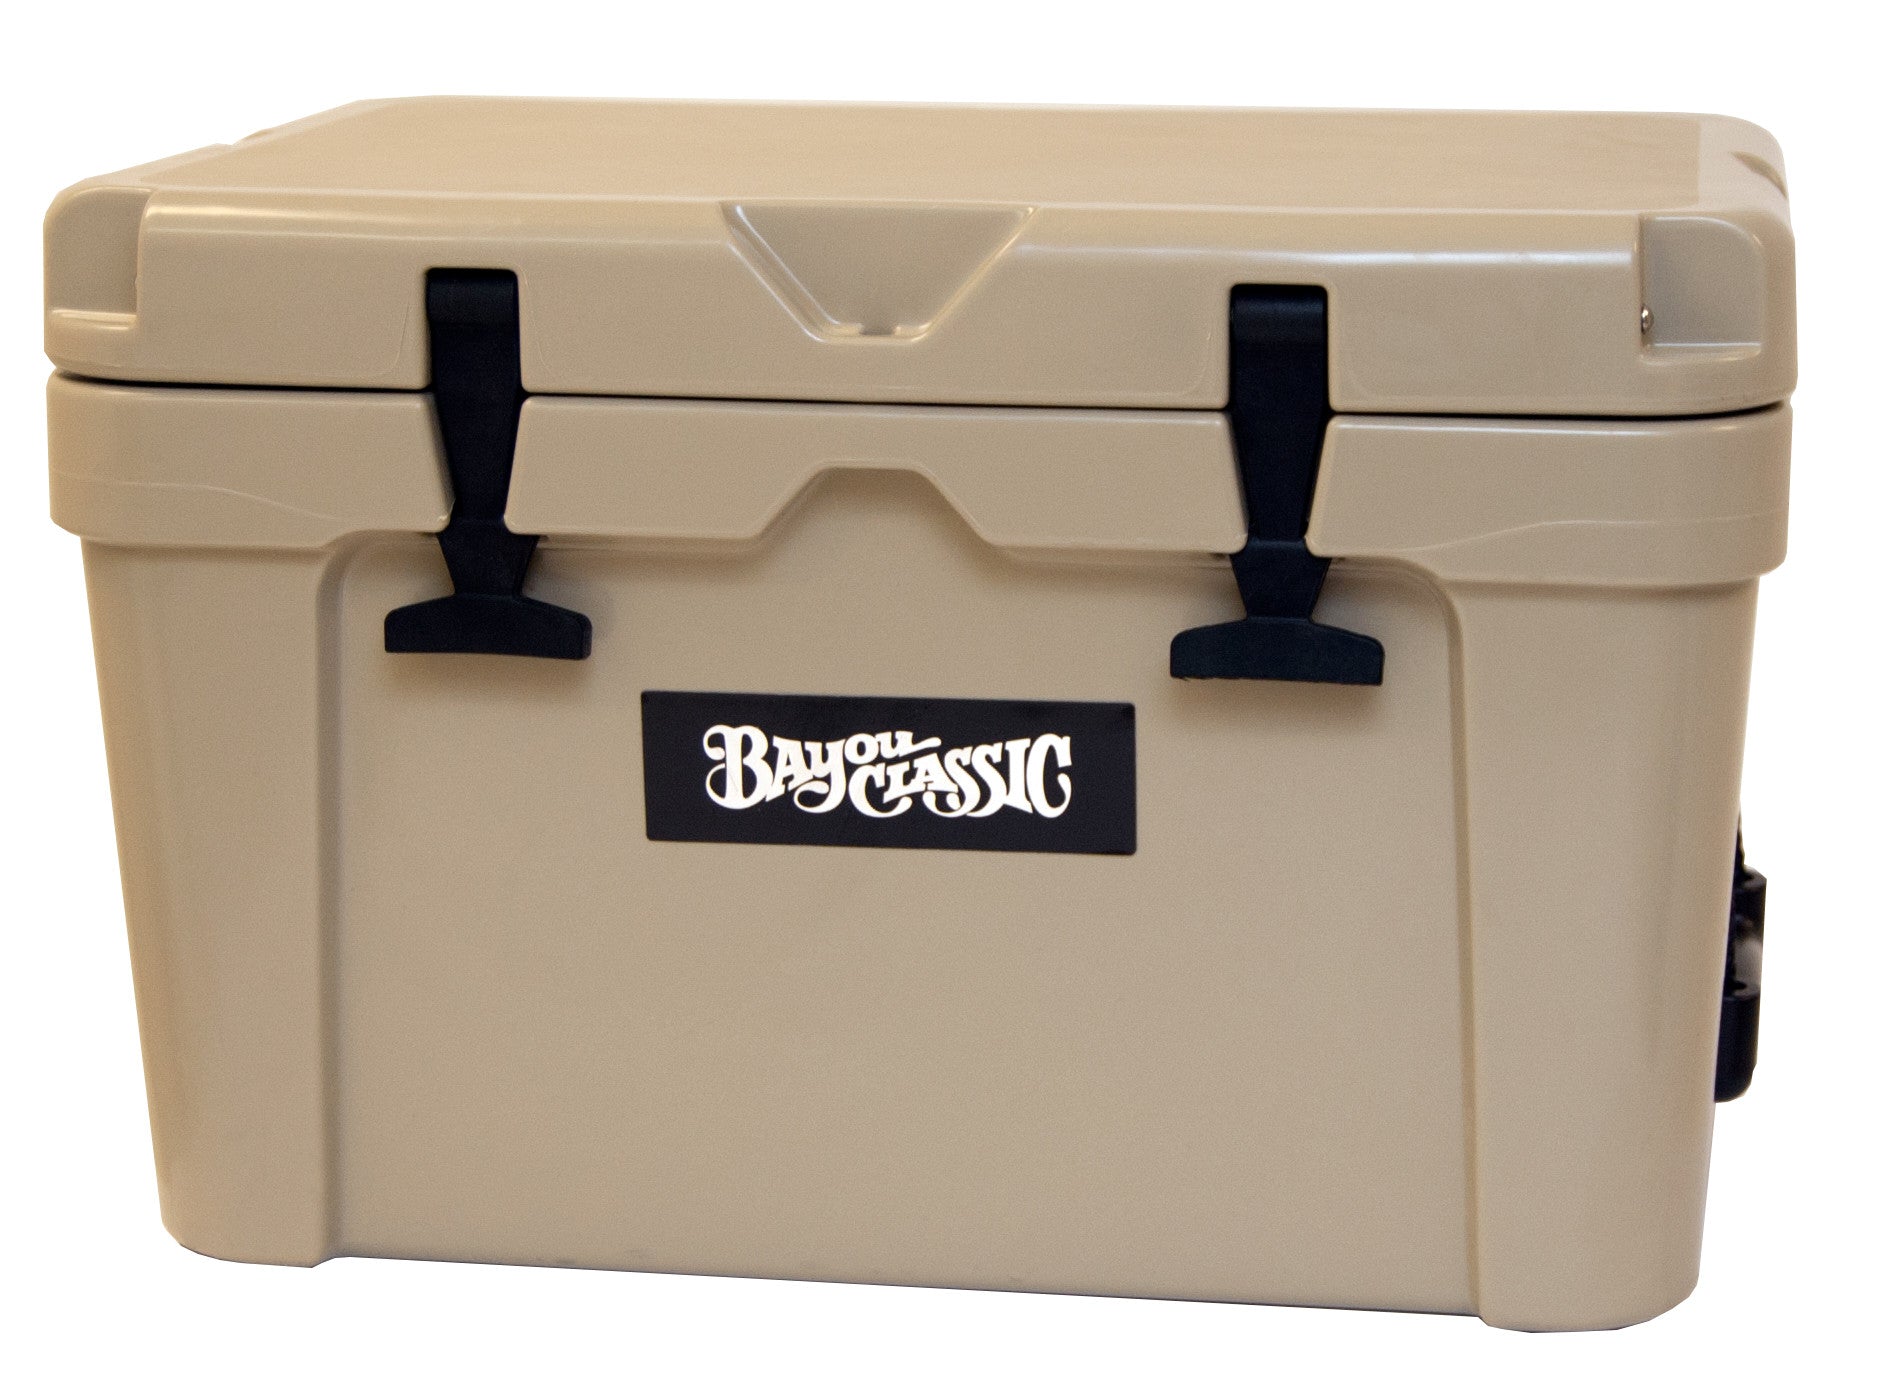 Bayou Classic® Coolers, Tan